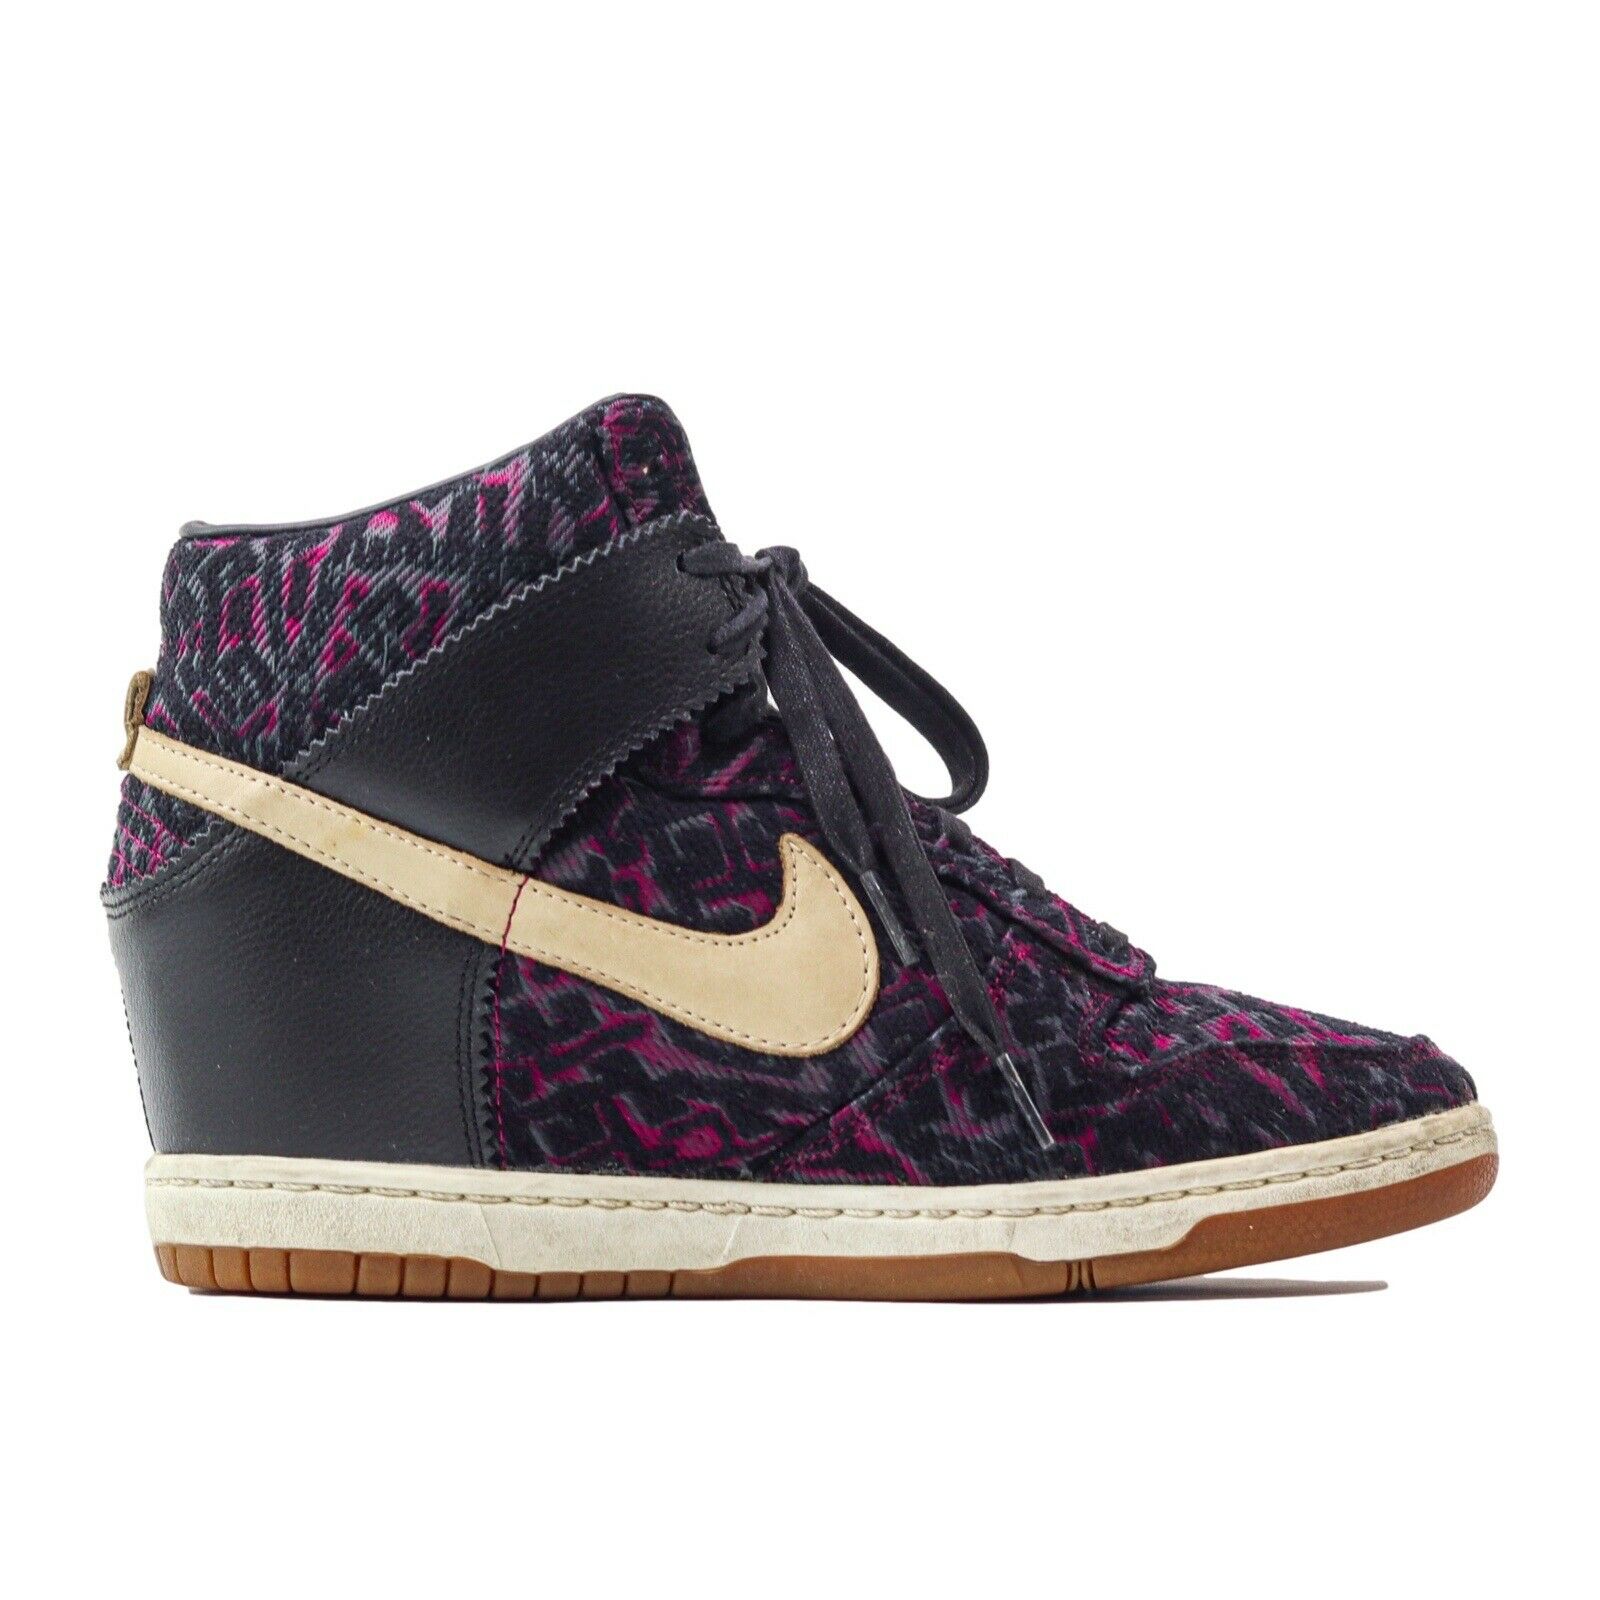 Nike Womens Dunk Sky Hi 585560 001 Premium Black Linen Sneaker Shoes Size 9 (US)